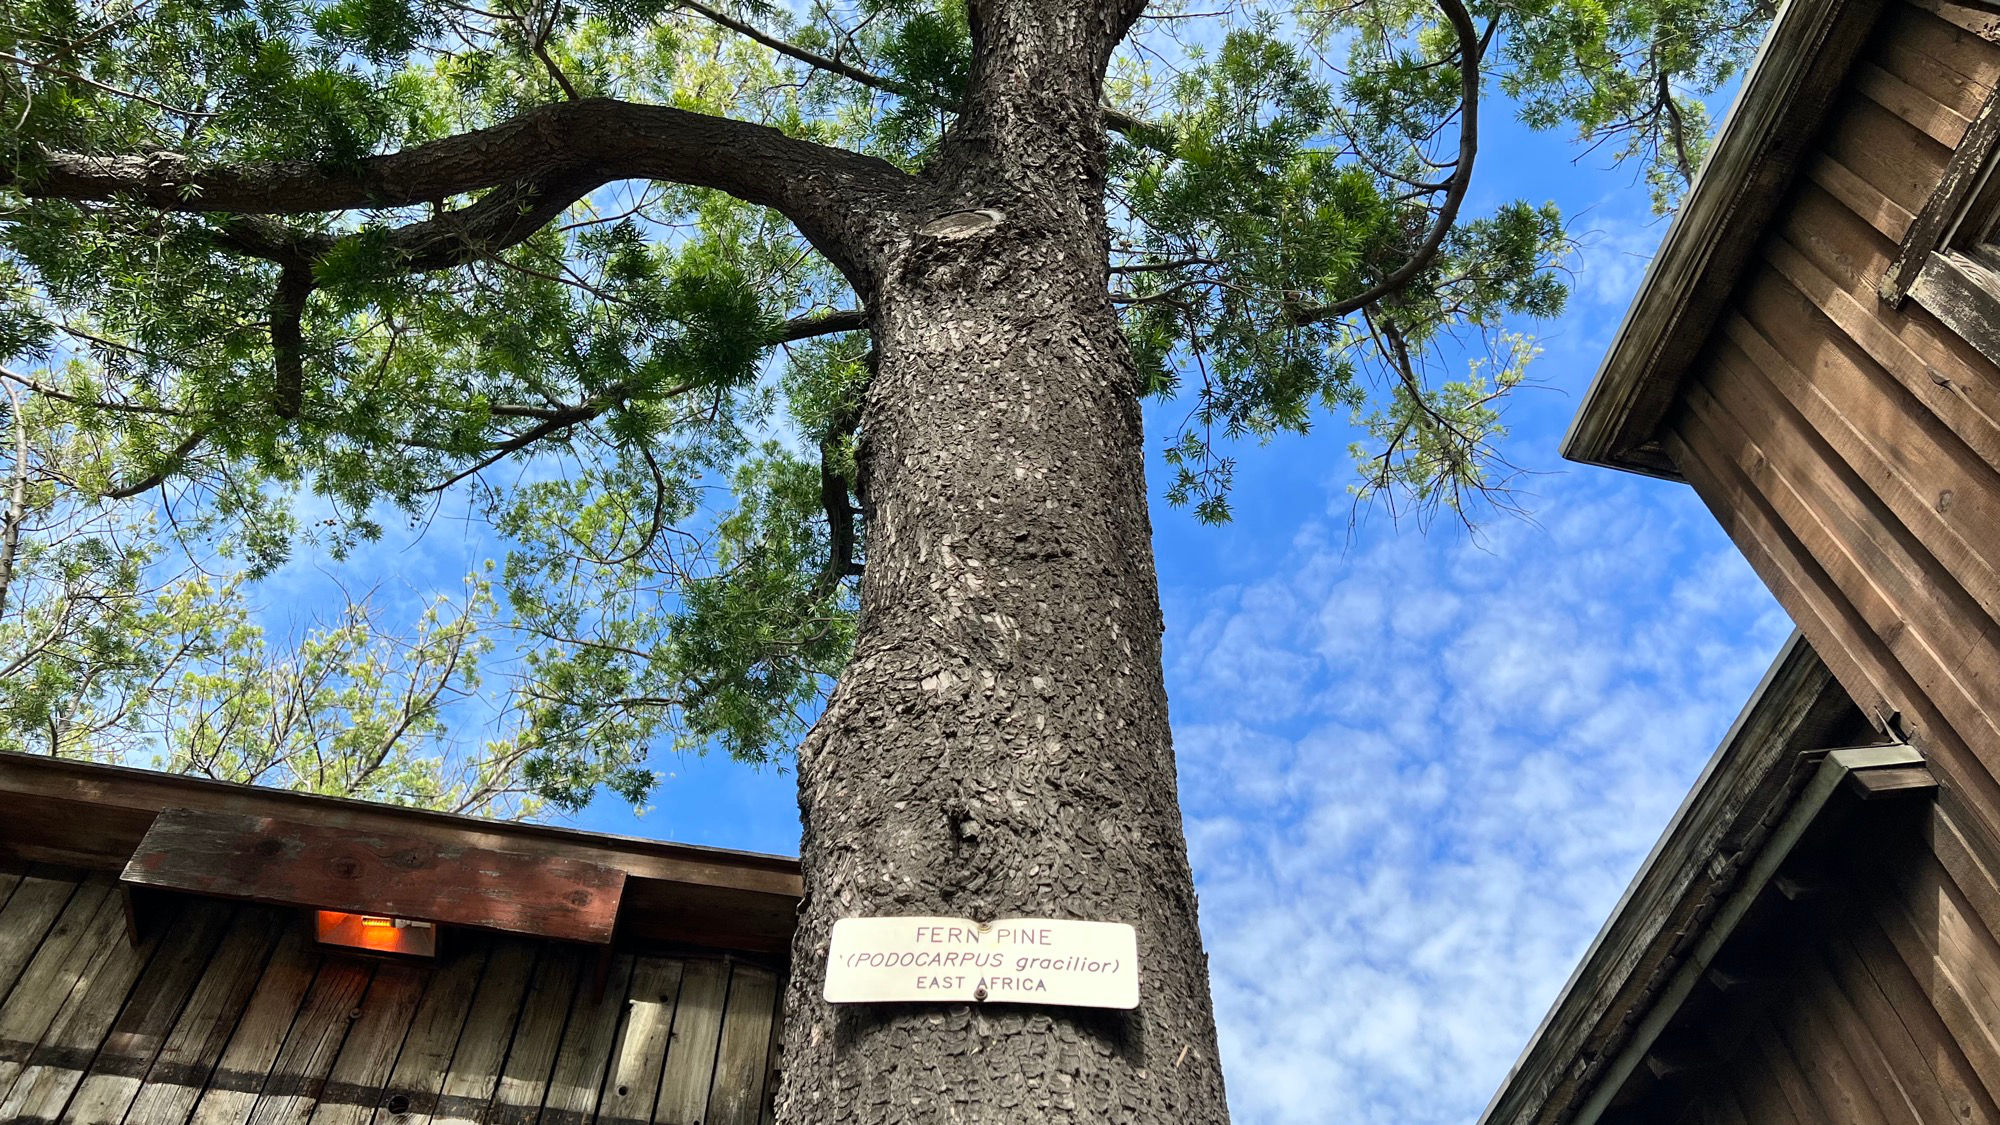 Knott's Berry Farm Fern Pine